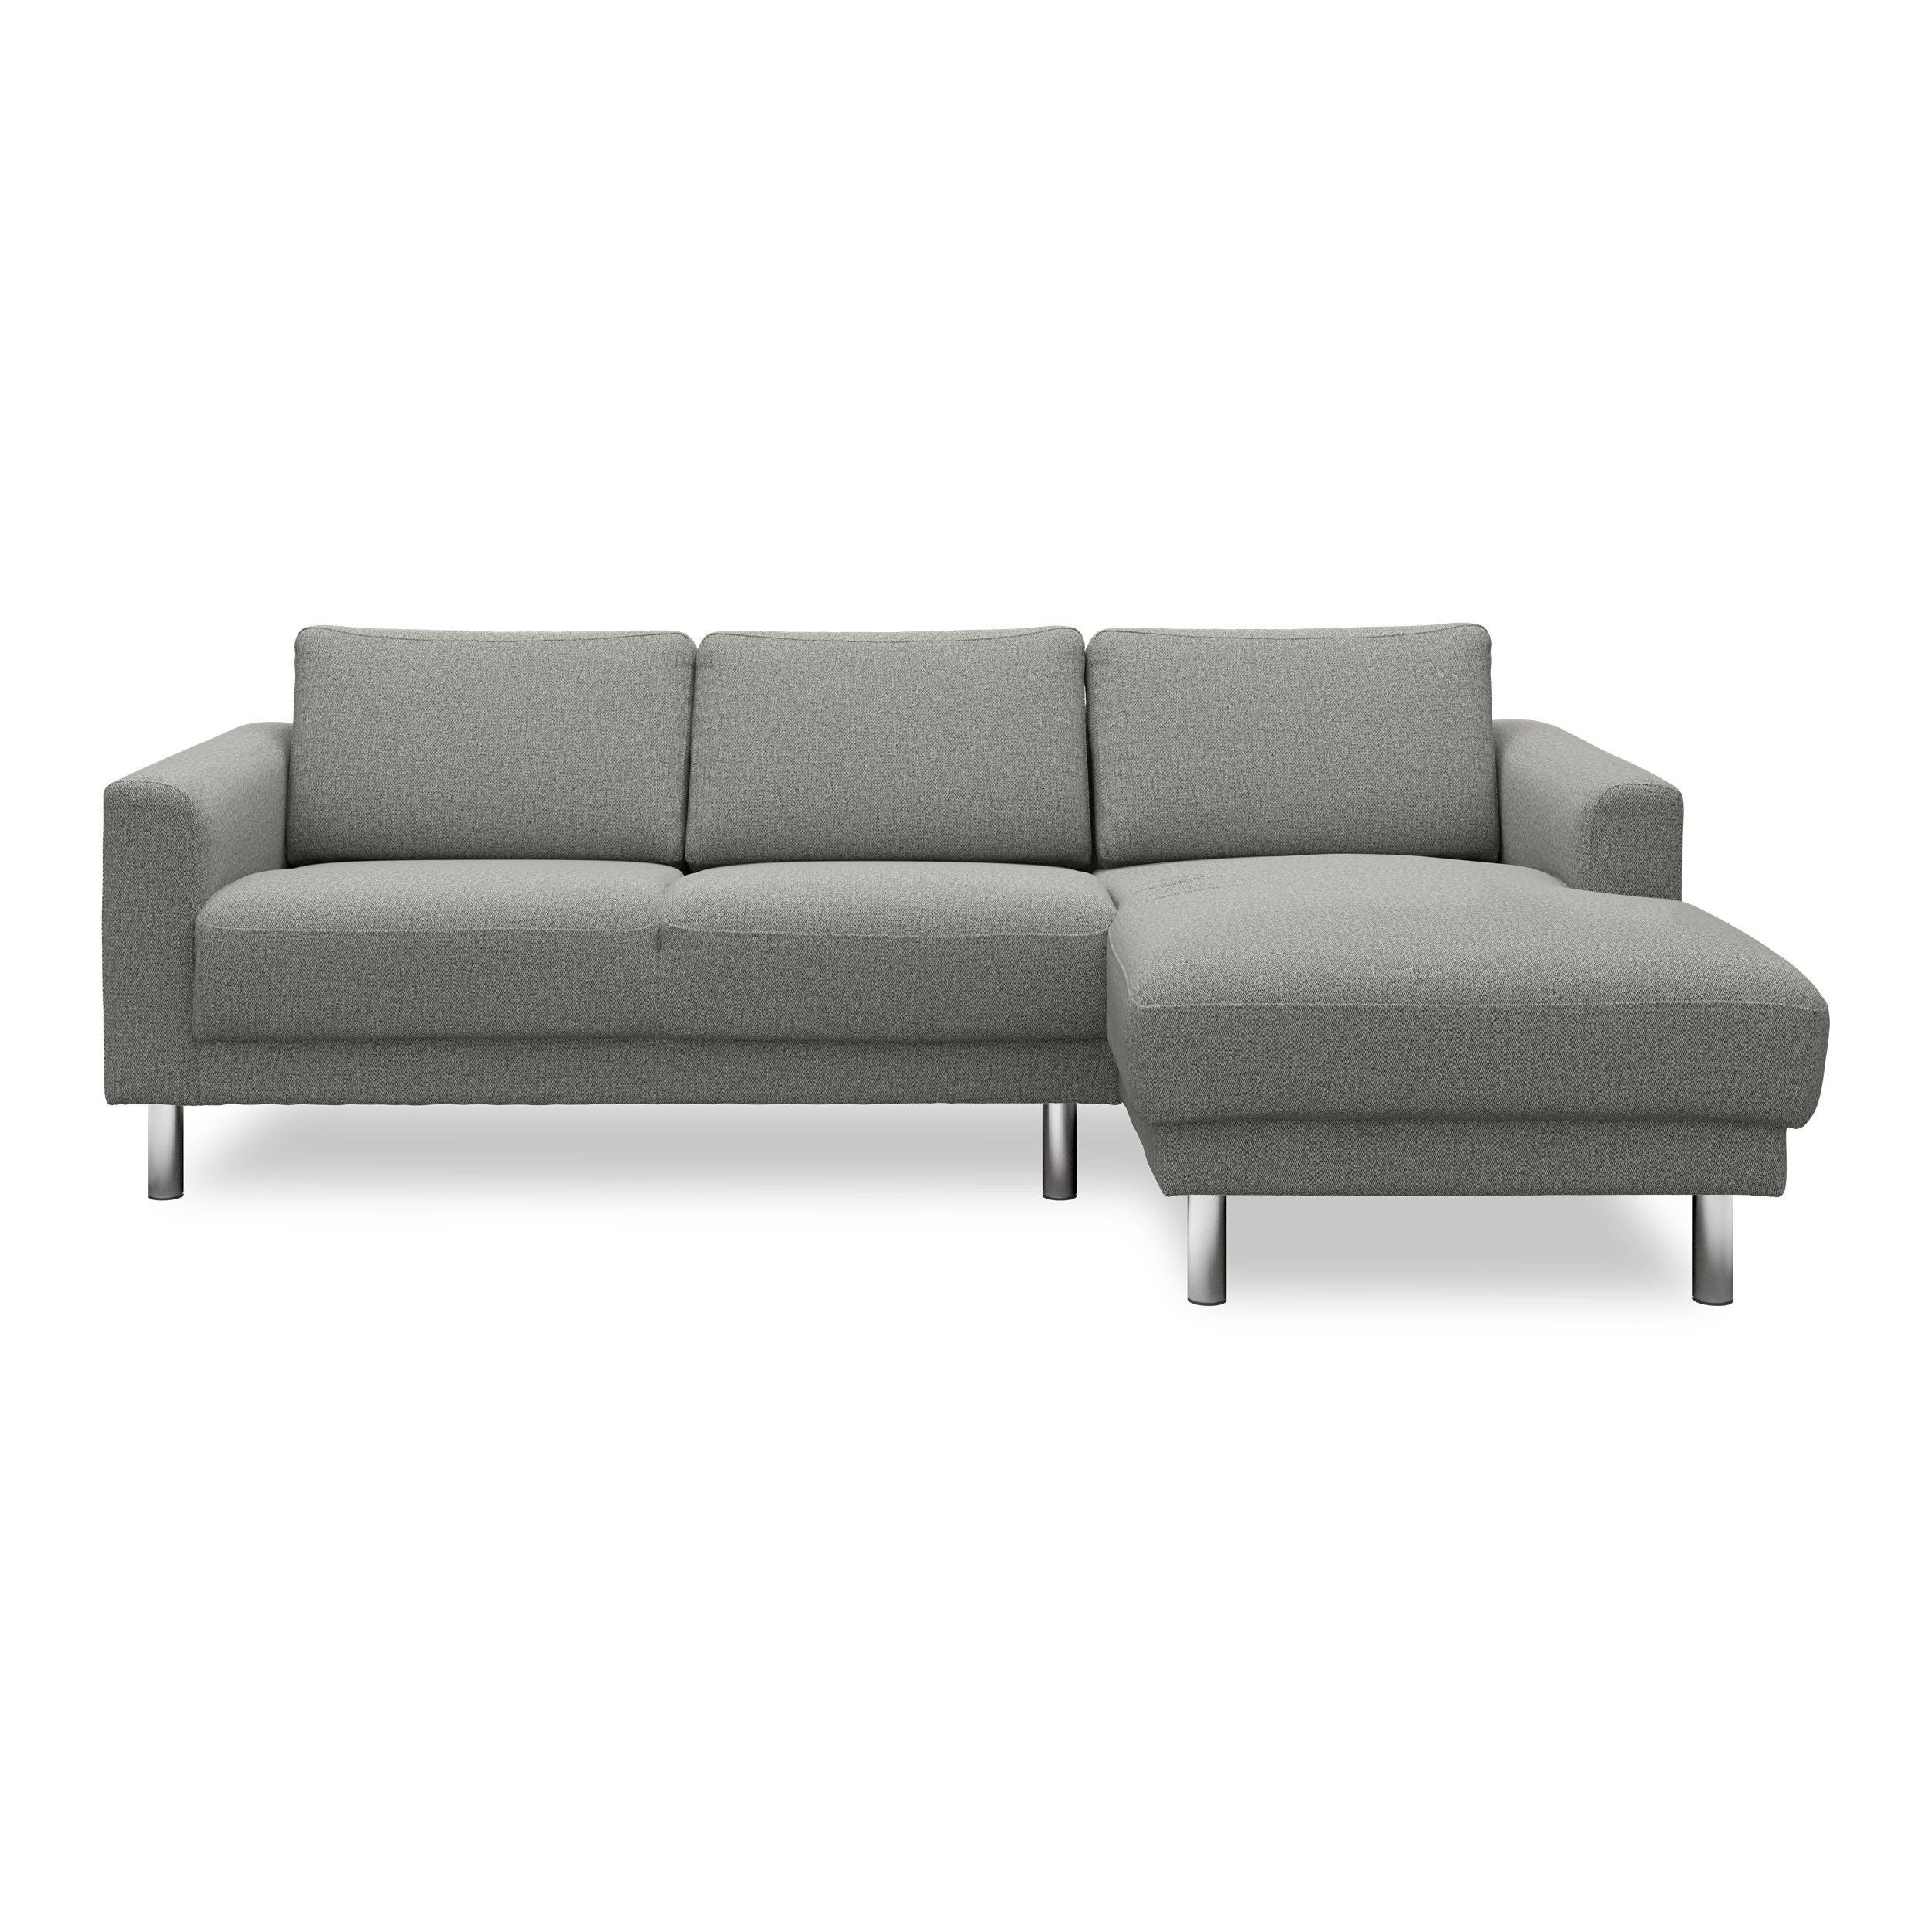 Cleveland højrevendt sofa med chaiselong 